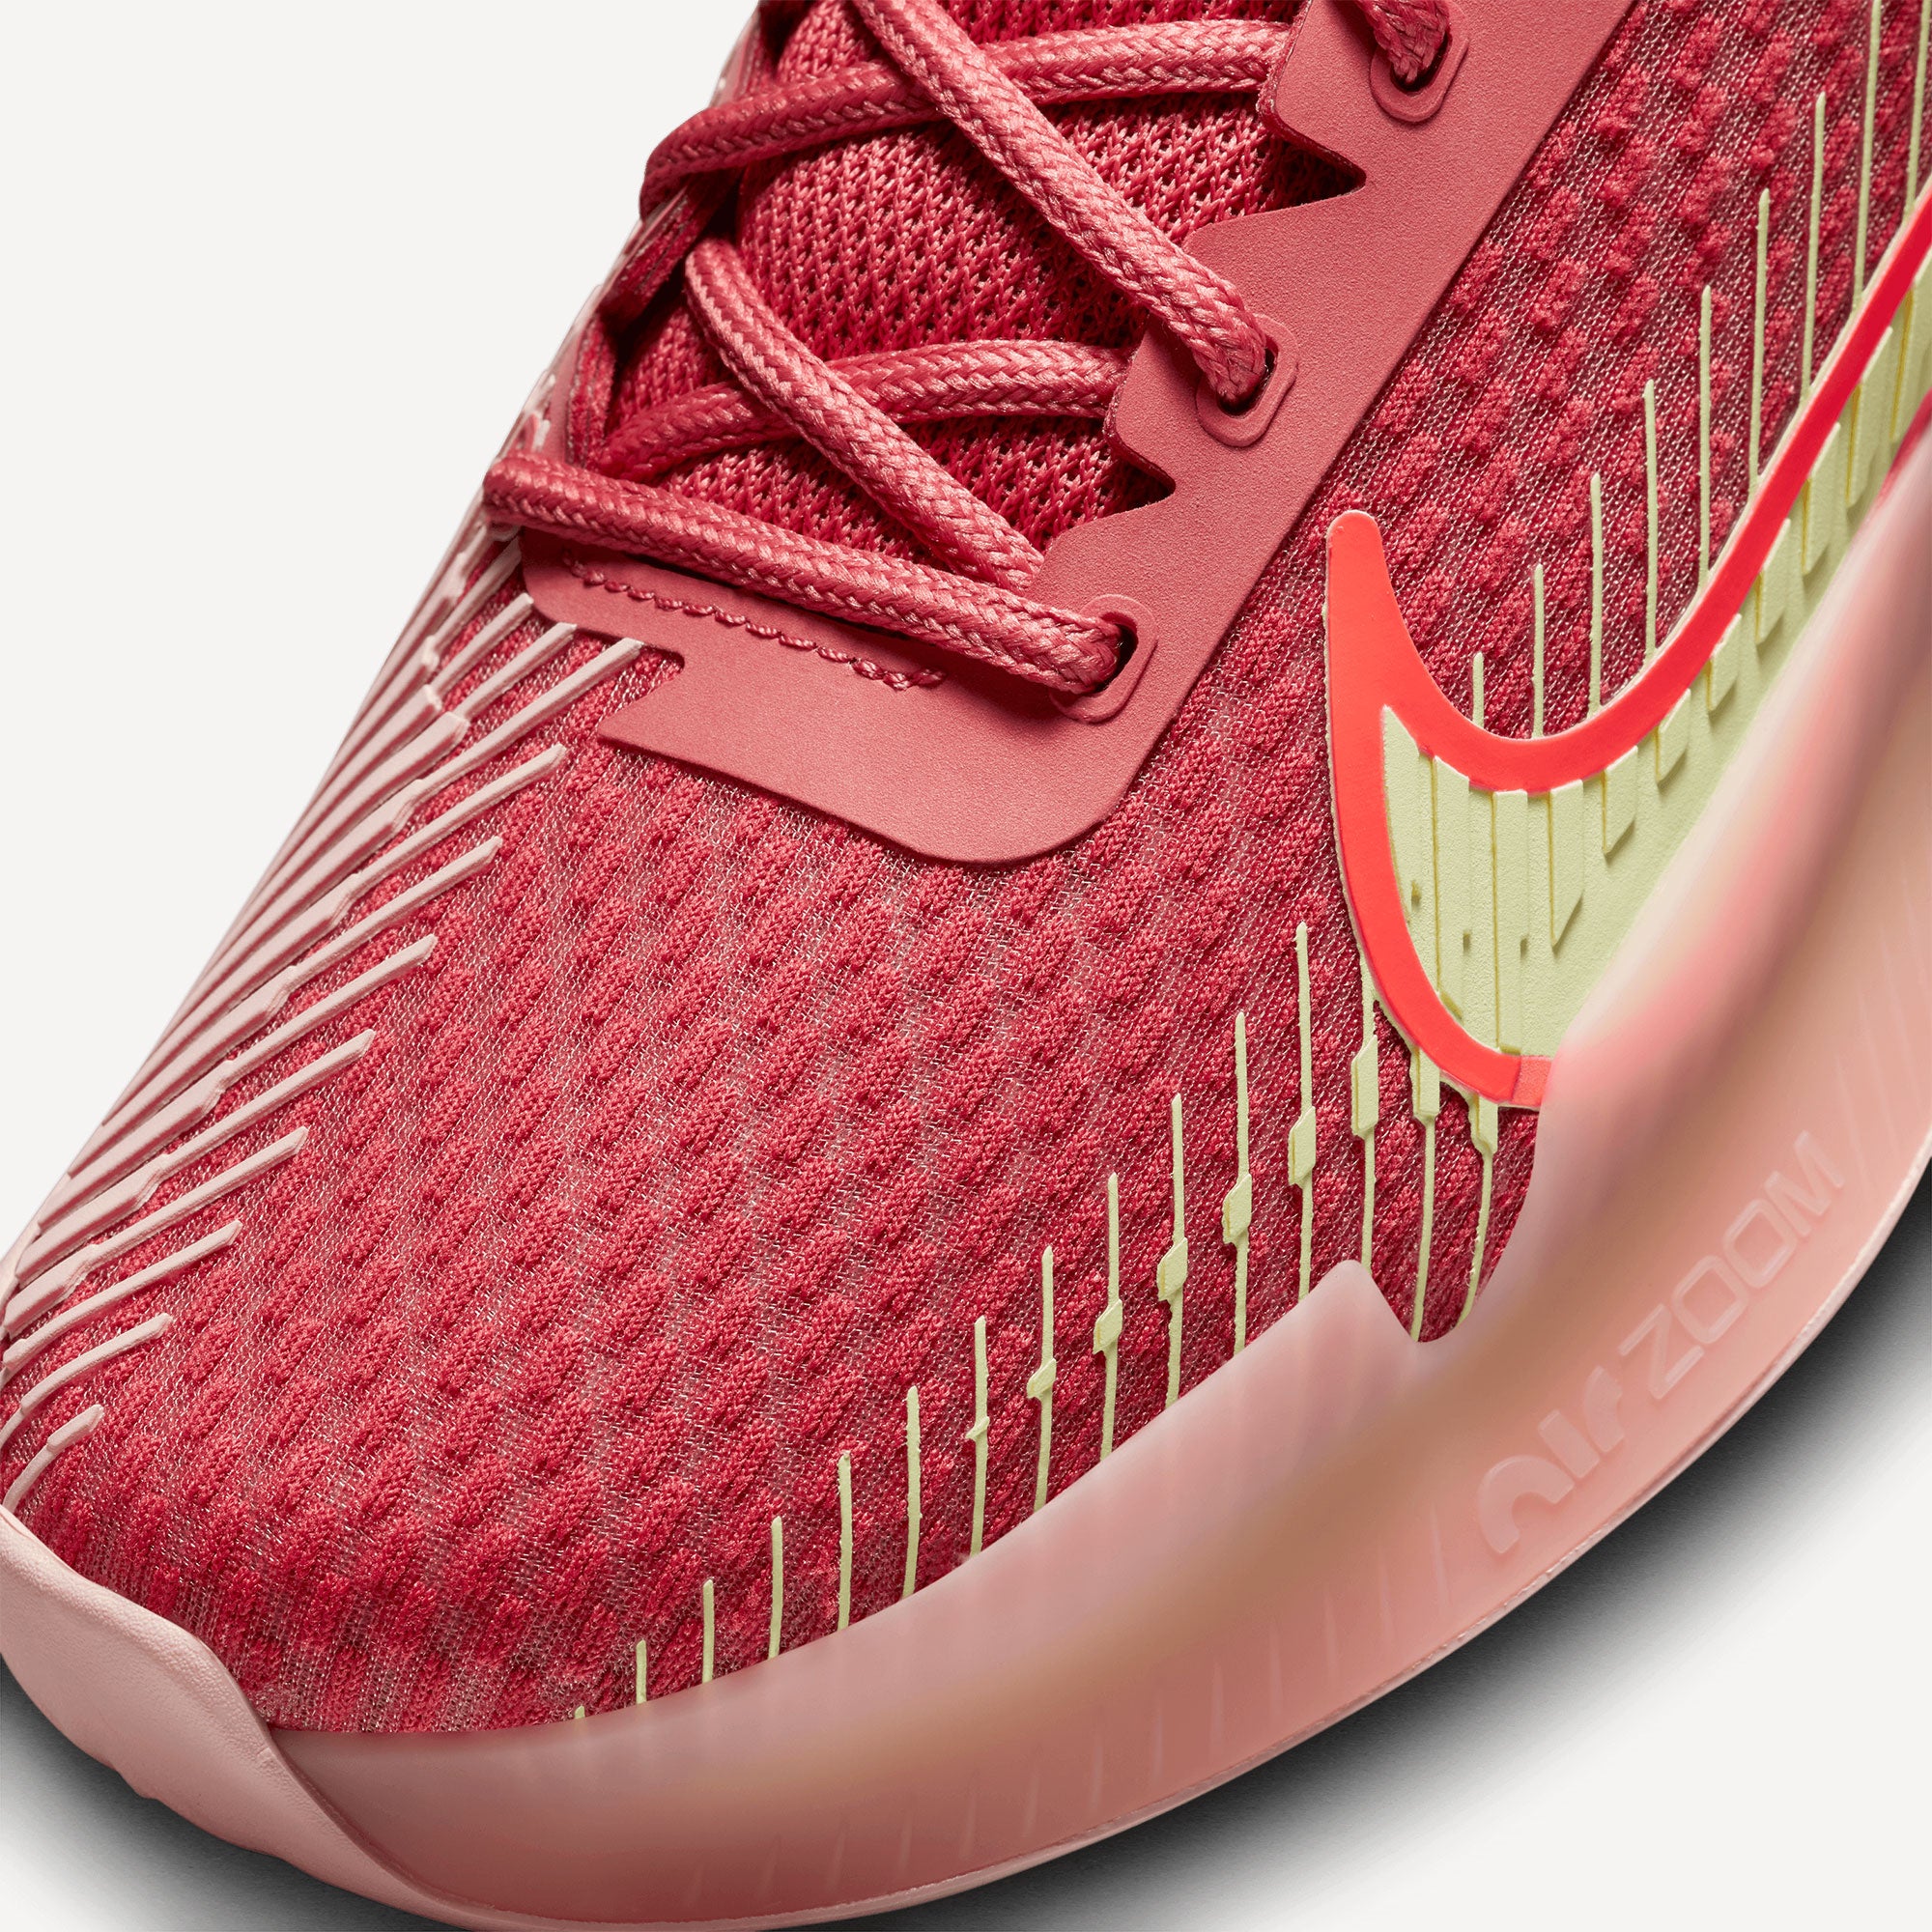 NikeCourt Air Zoom Vapor 11 Women's Clay Court Tennis Shoes - Red